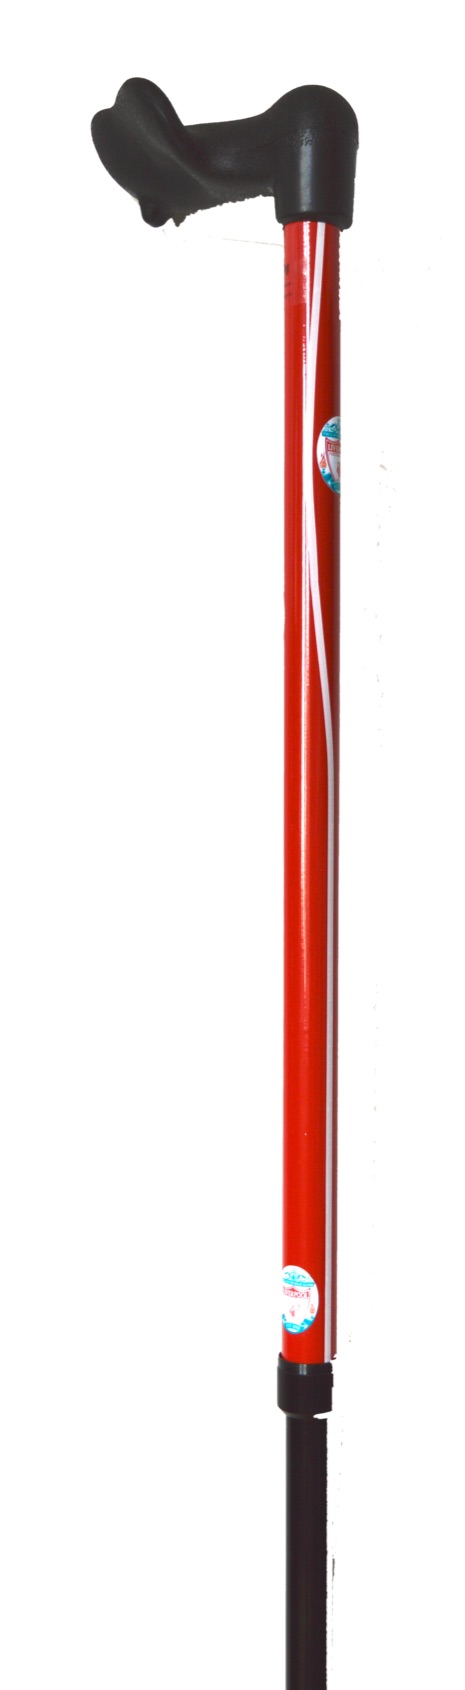 Liverpool Erg Custom Football Cane Walking Stick from Pimp Mobility